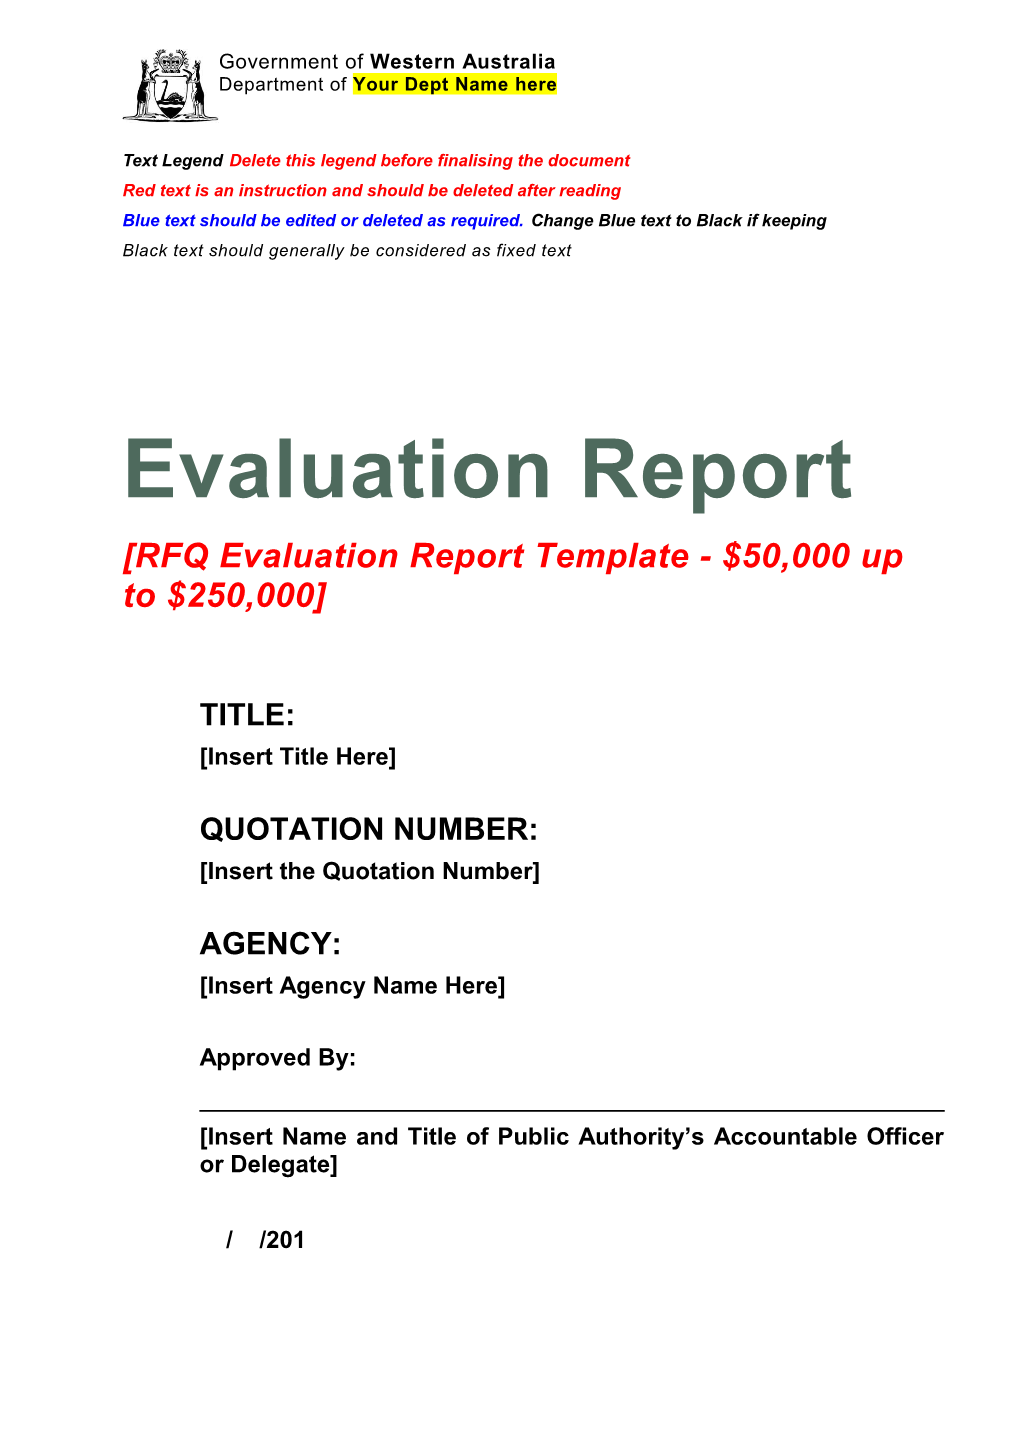 RFQ Evaluation Report